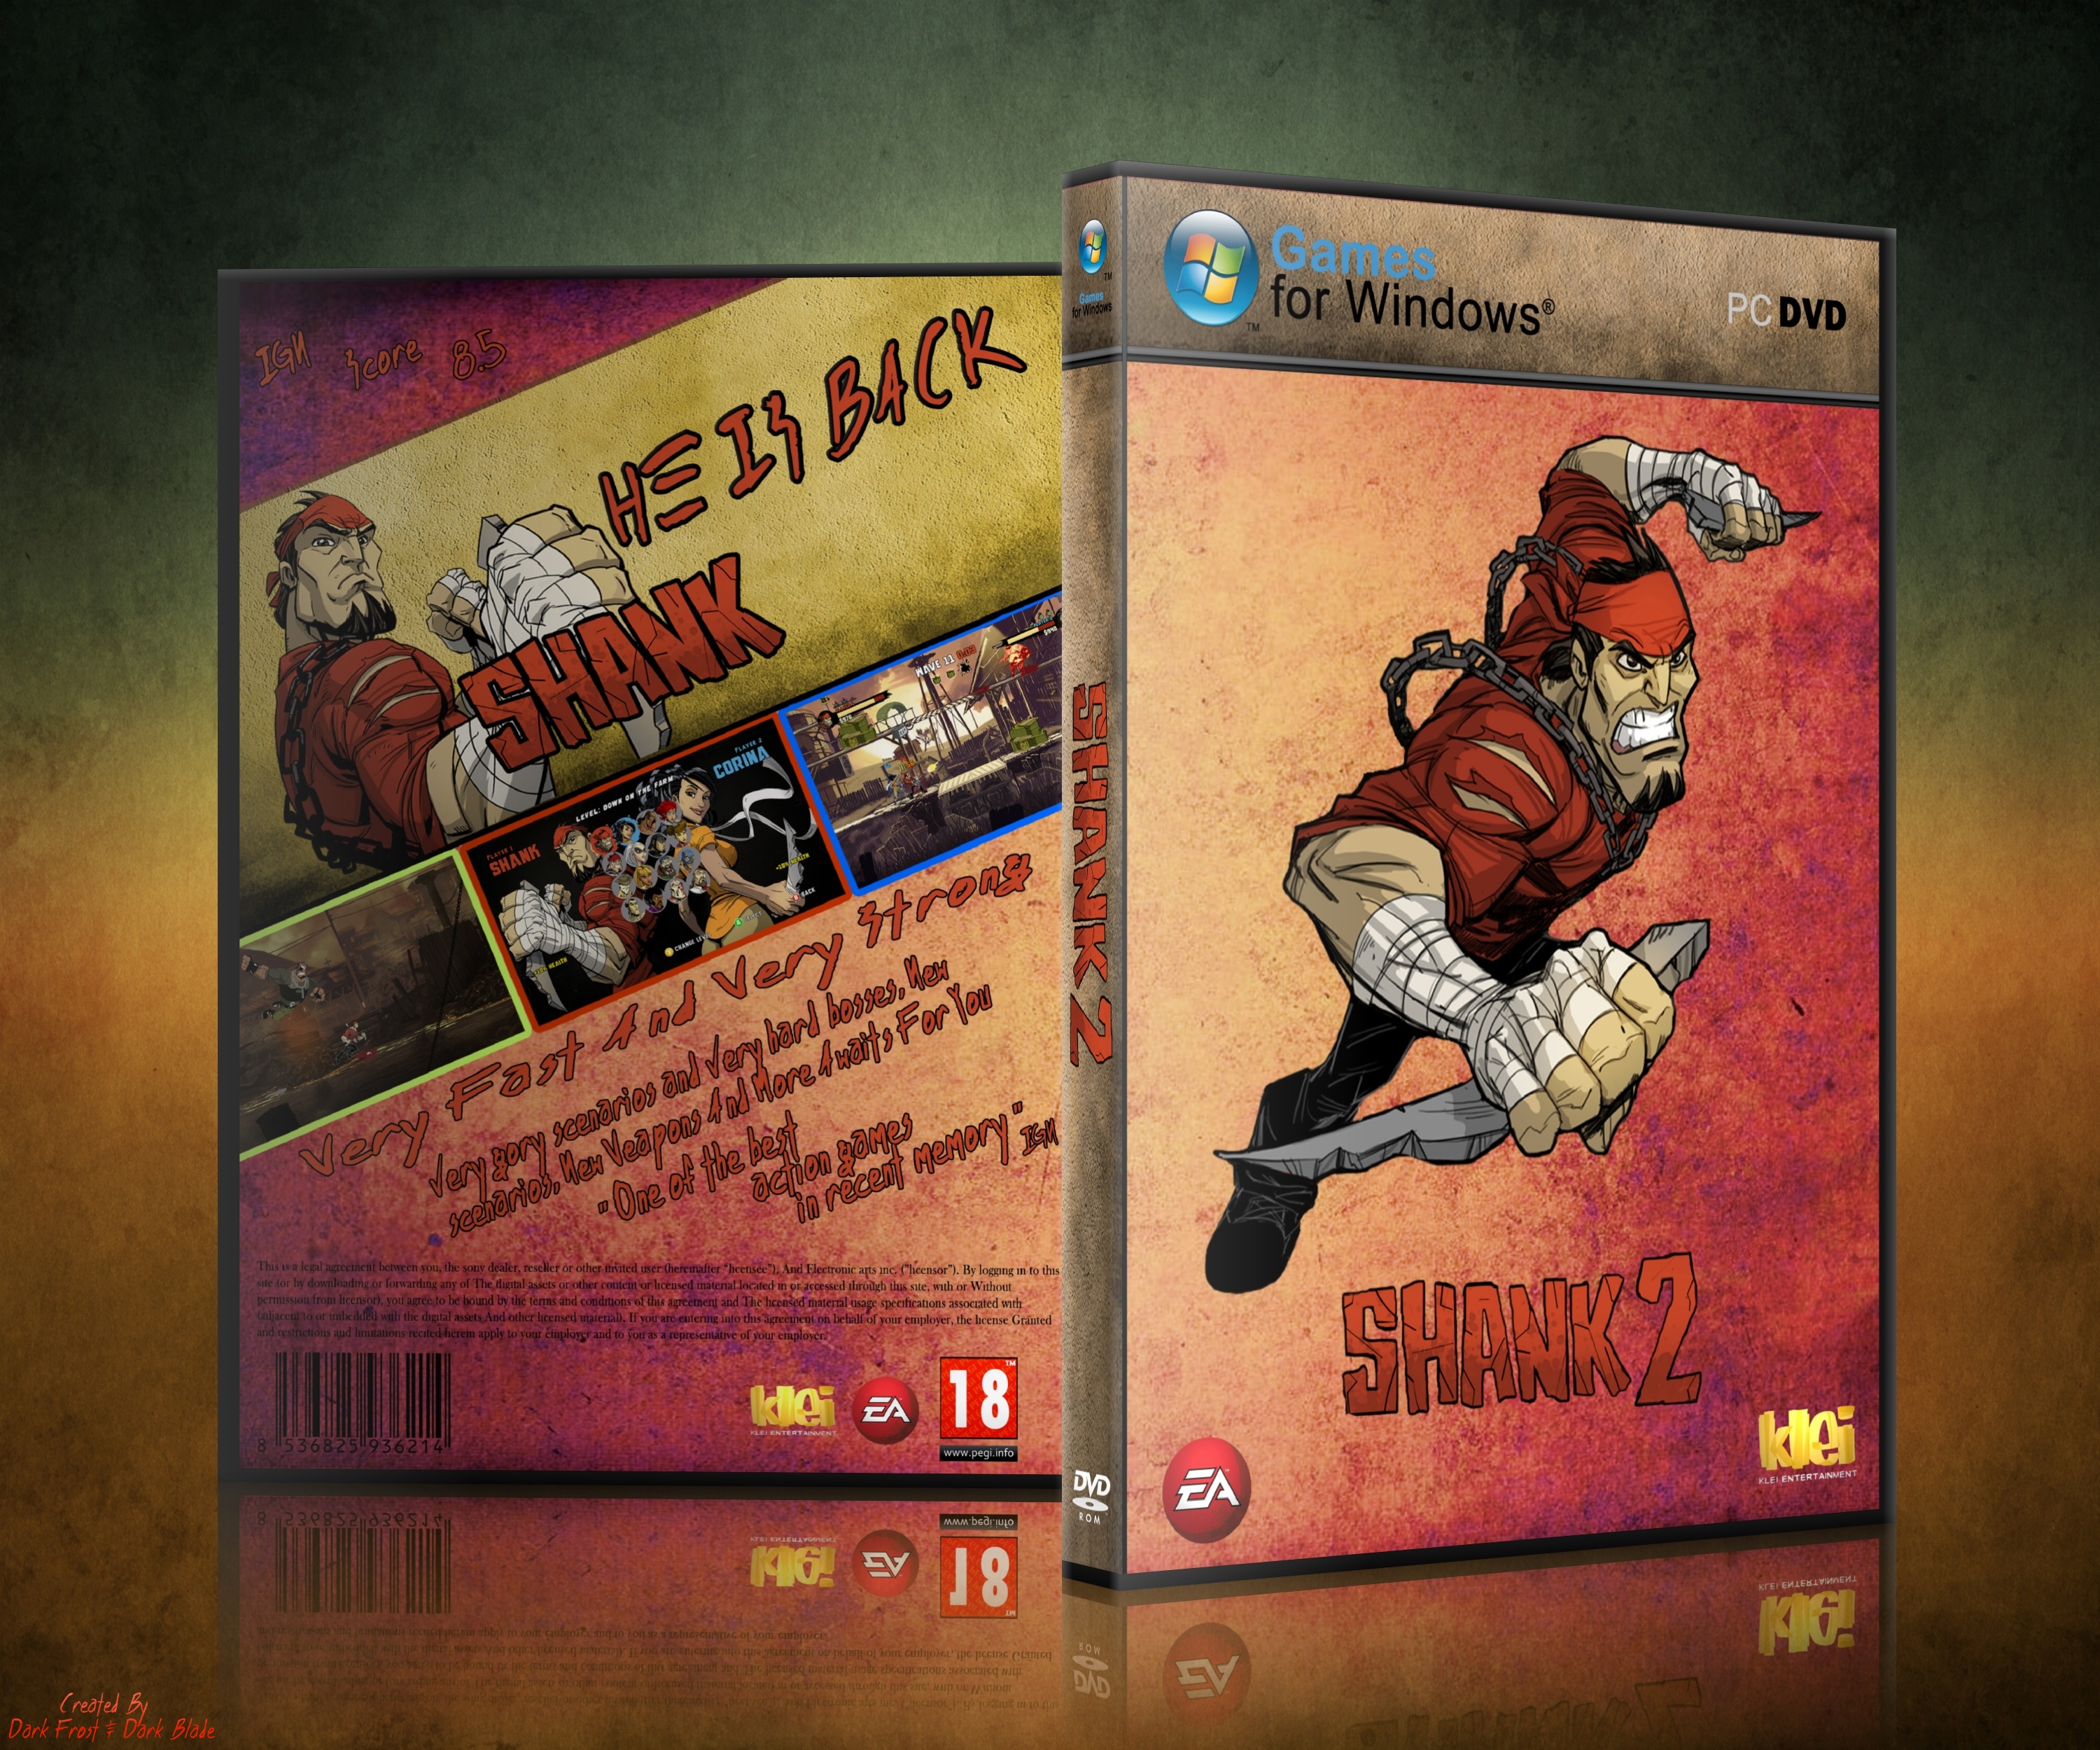 Shank 2 box cover